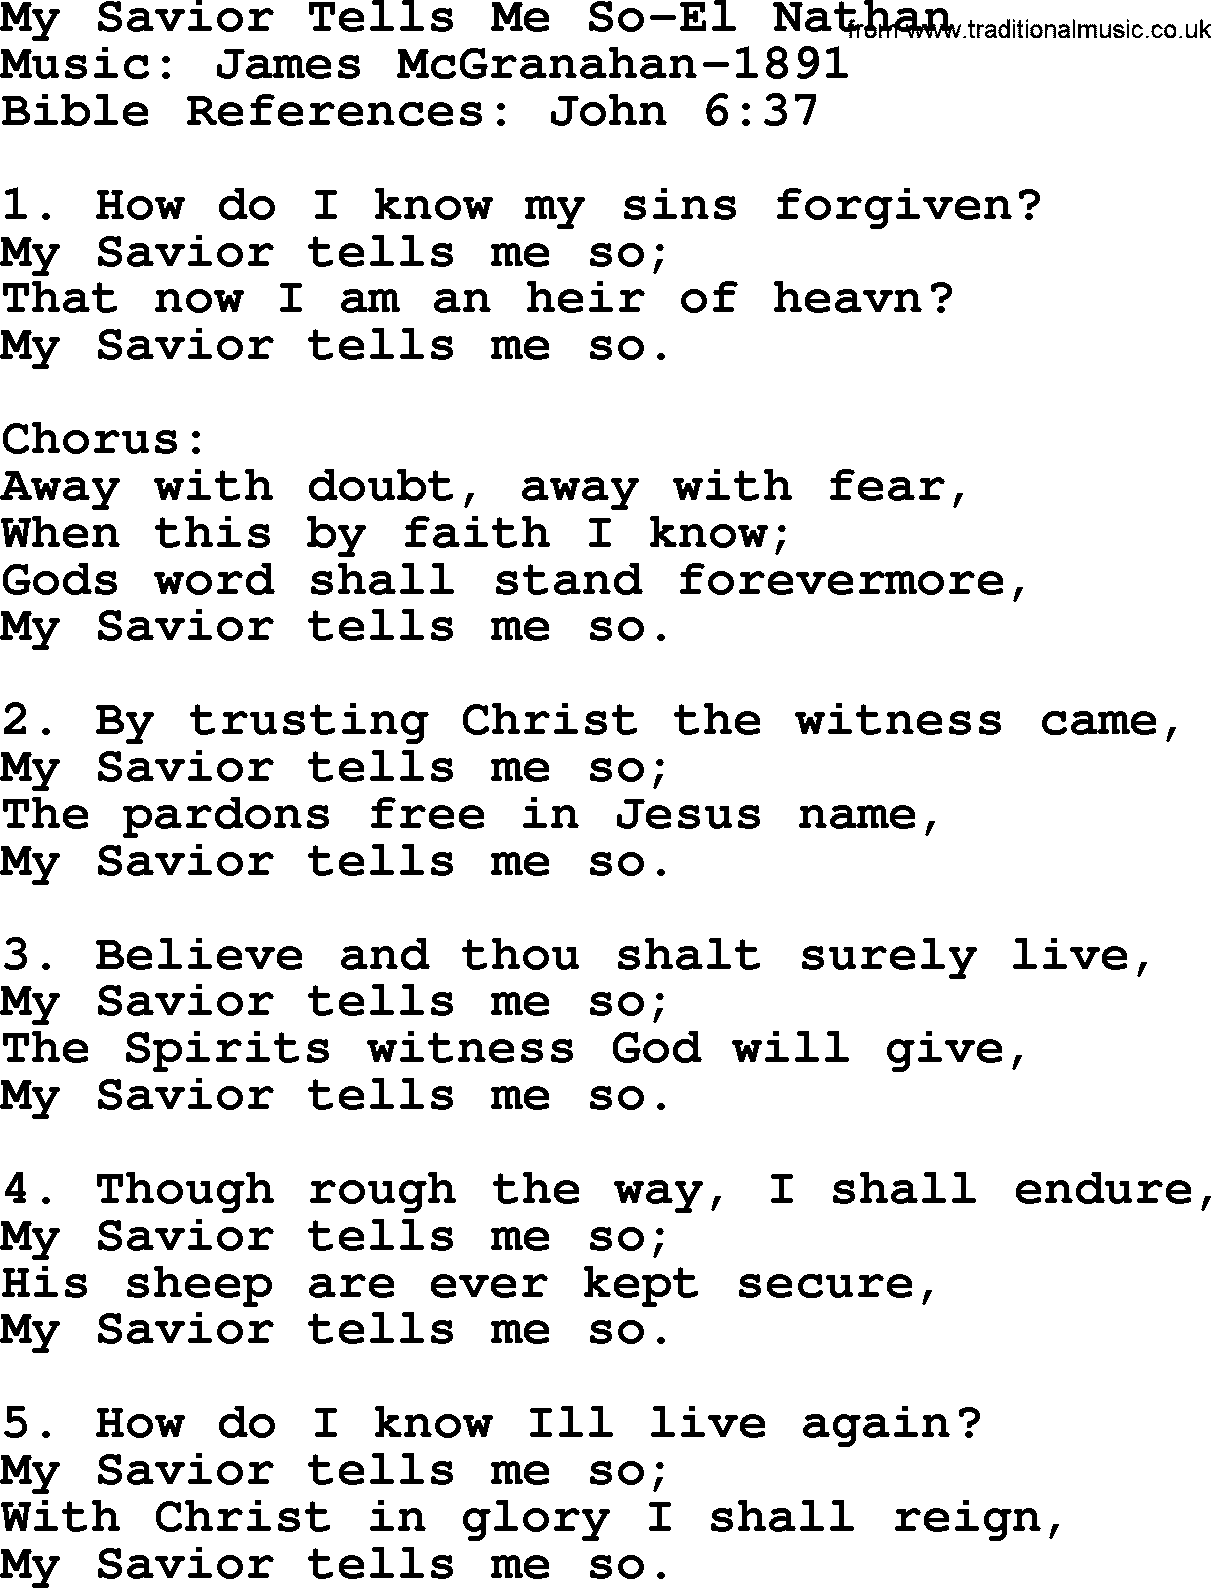 Forgiveness hymns, Hymn: My Savior Tells Me So-El Nathan, lyrics with PDF